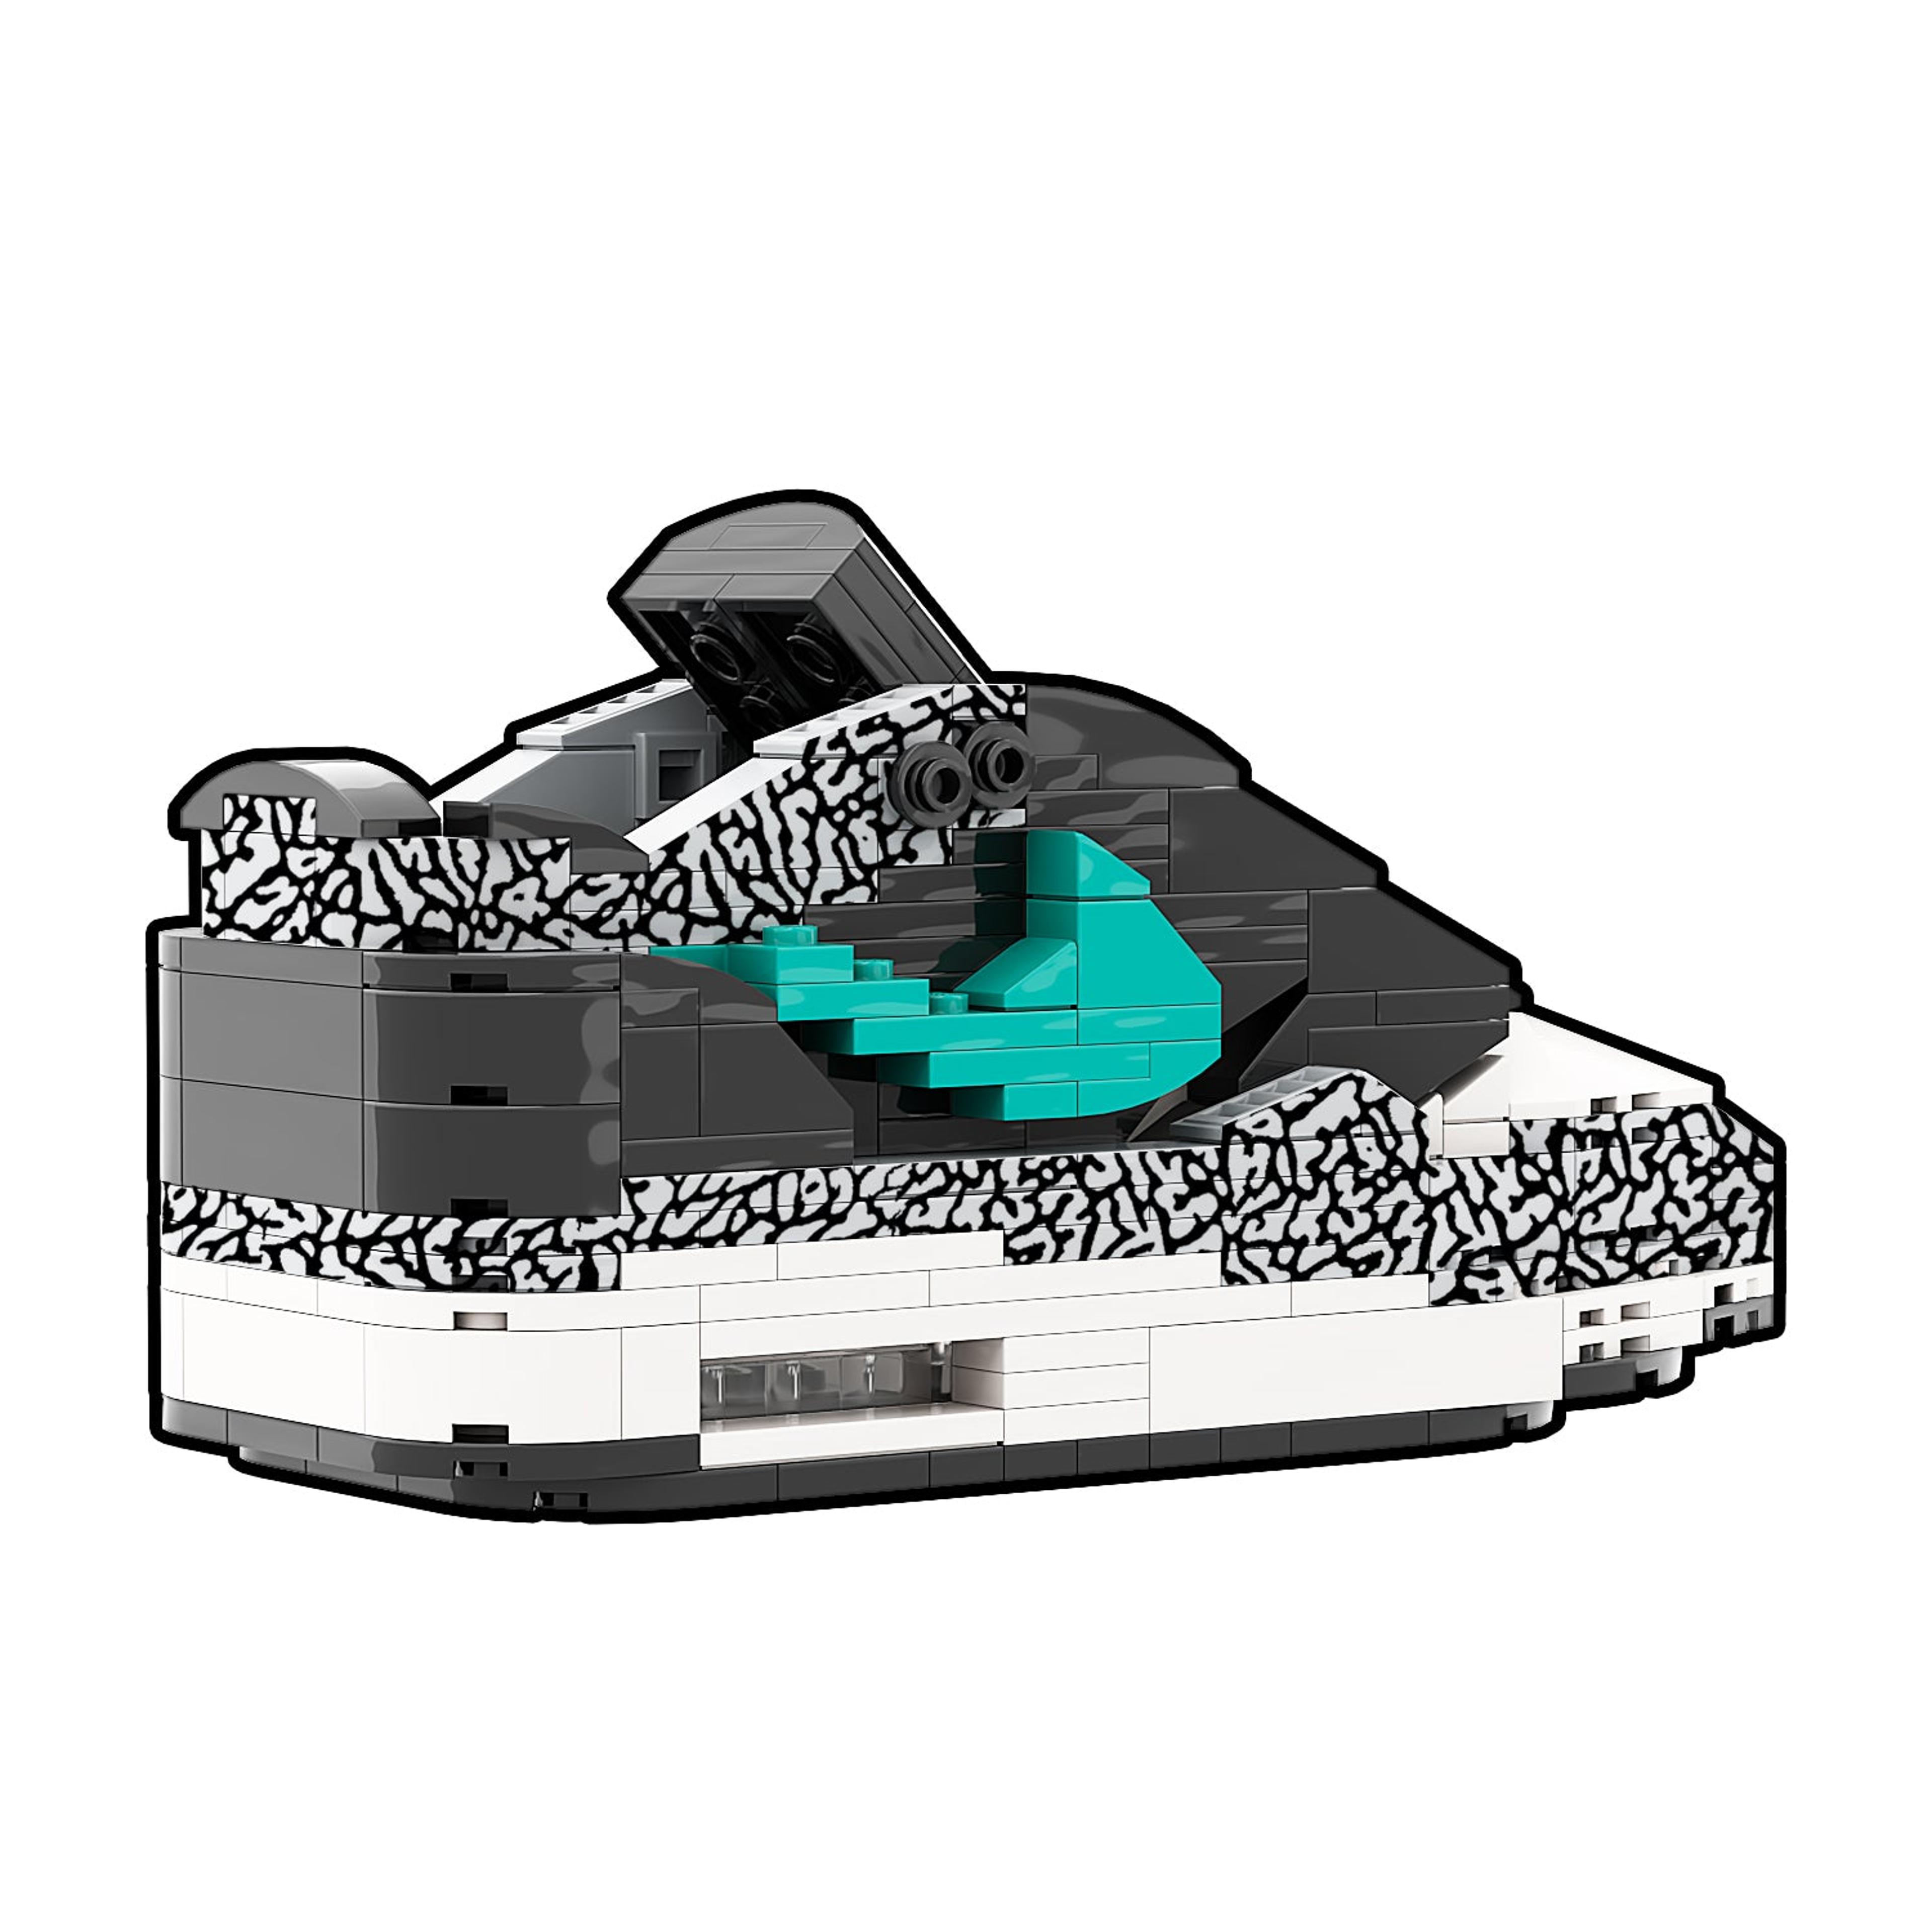 Alternate View 7 of REGULAR Air Max 1 "Atmos" Sneaker Bricks with Mini Figure